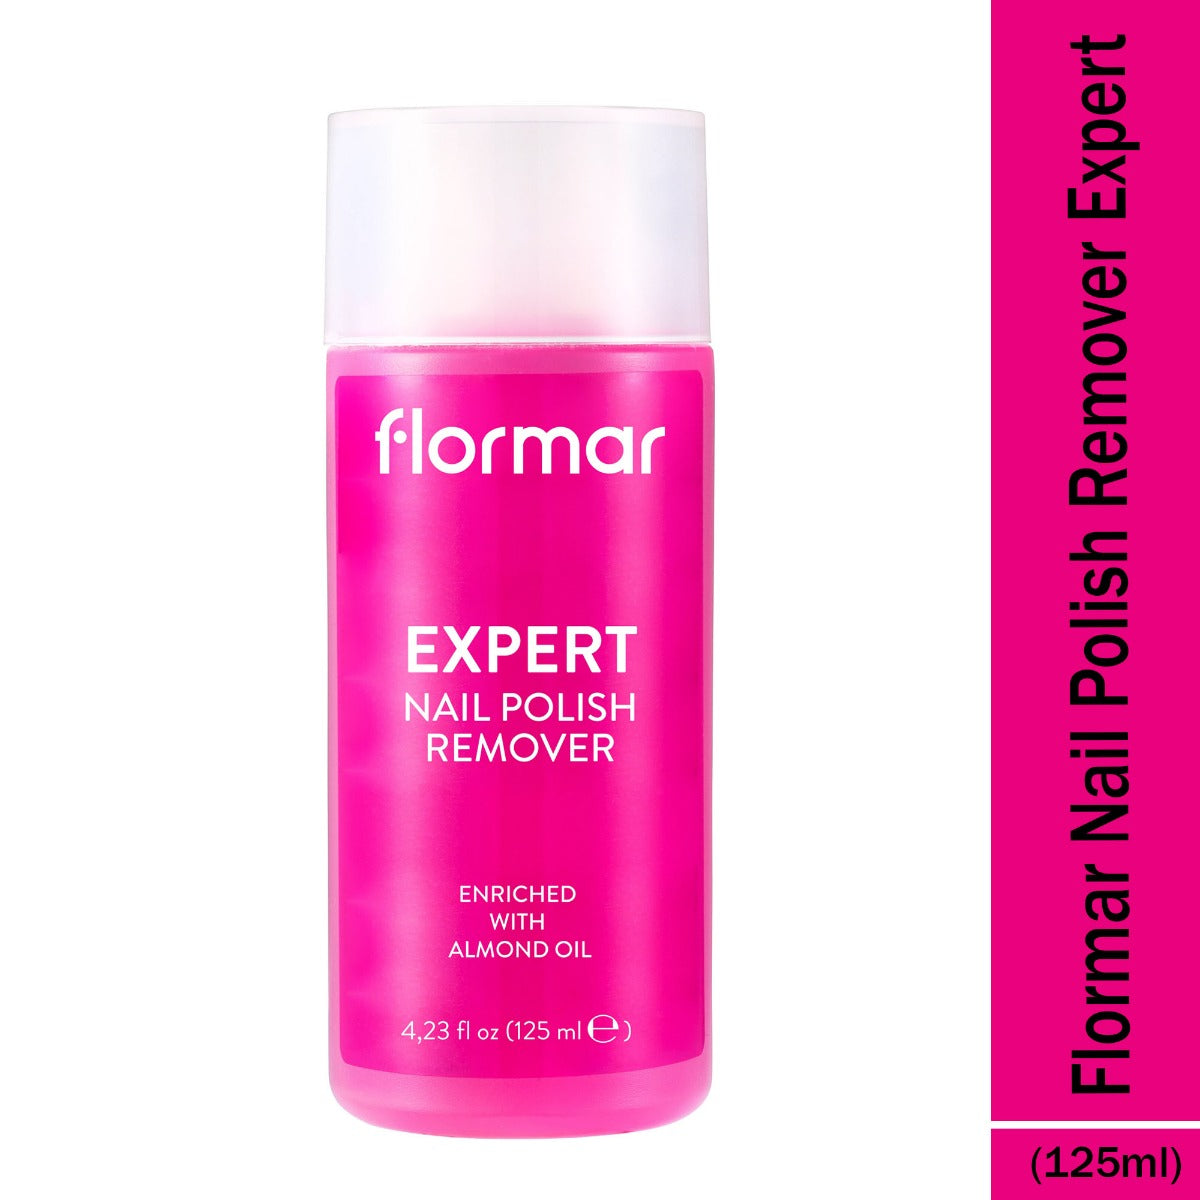 Flormar Nail Polish Remover Expert (125ml)